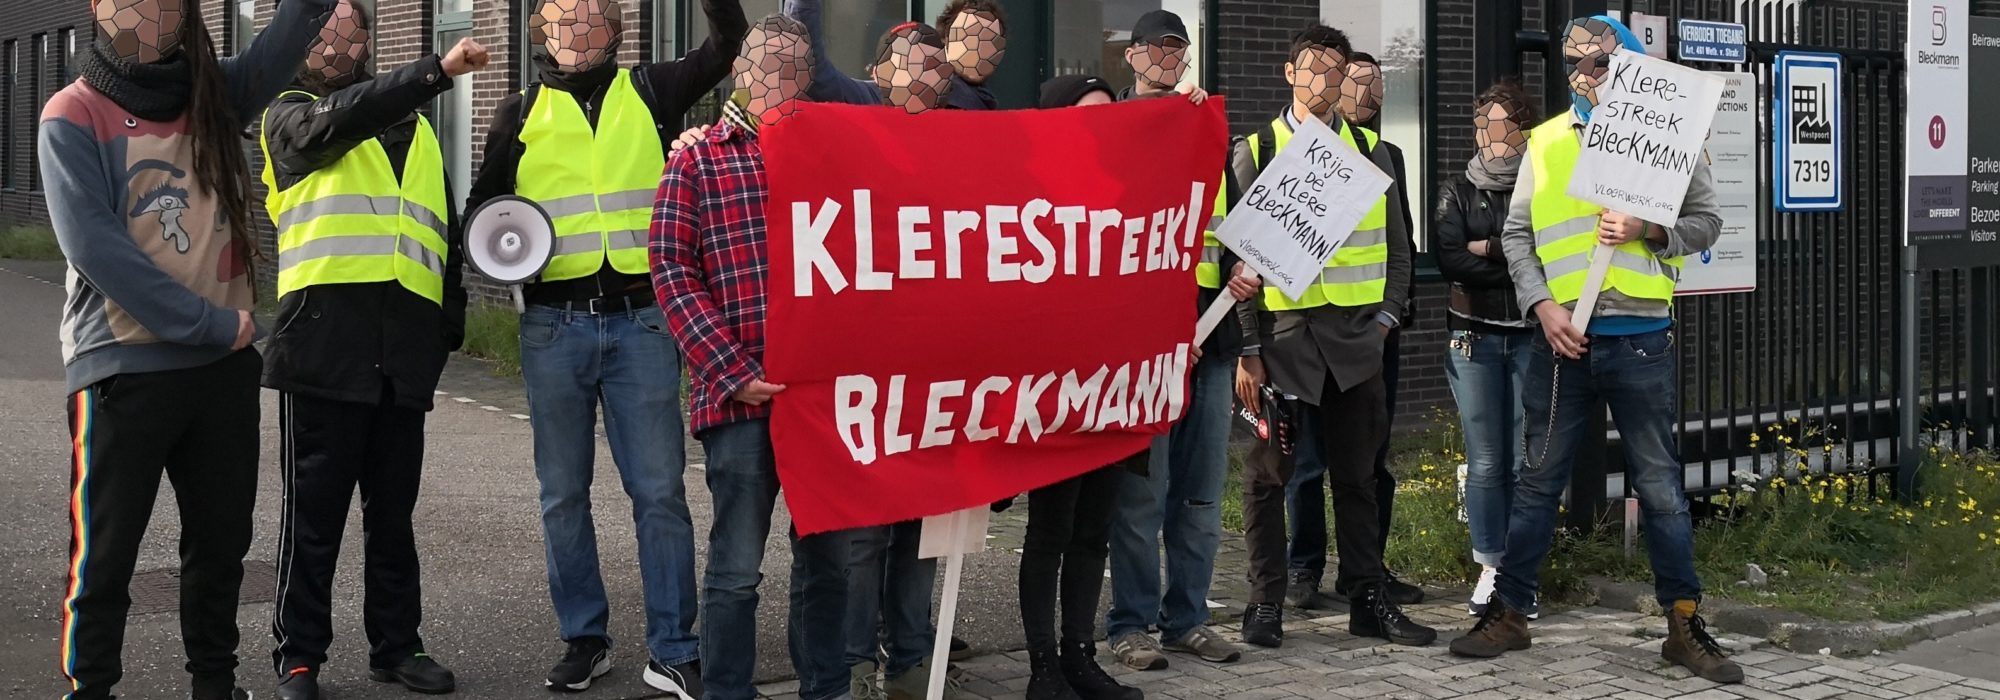 Klerestreek Bleckmann! actie tegen onzinontslagen en flex bij Amsterdams modedistributiecentrum Bleckmann